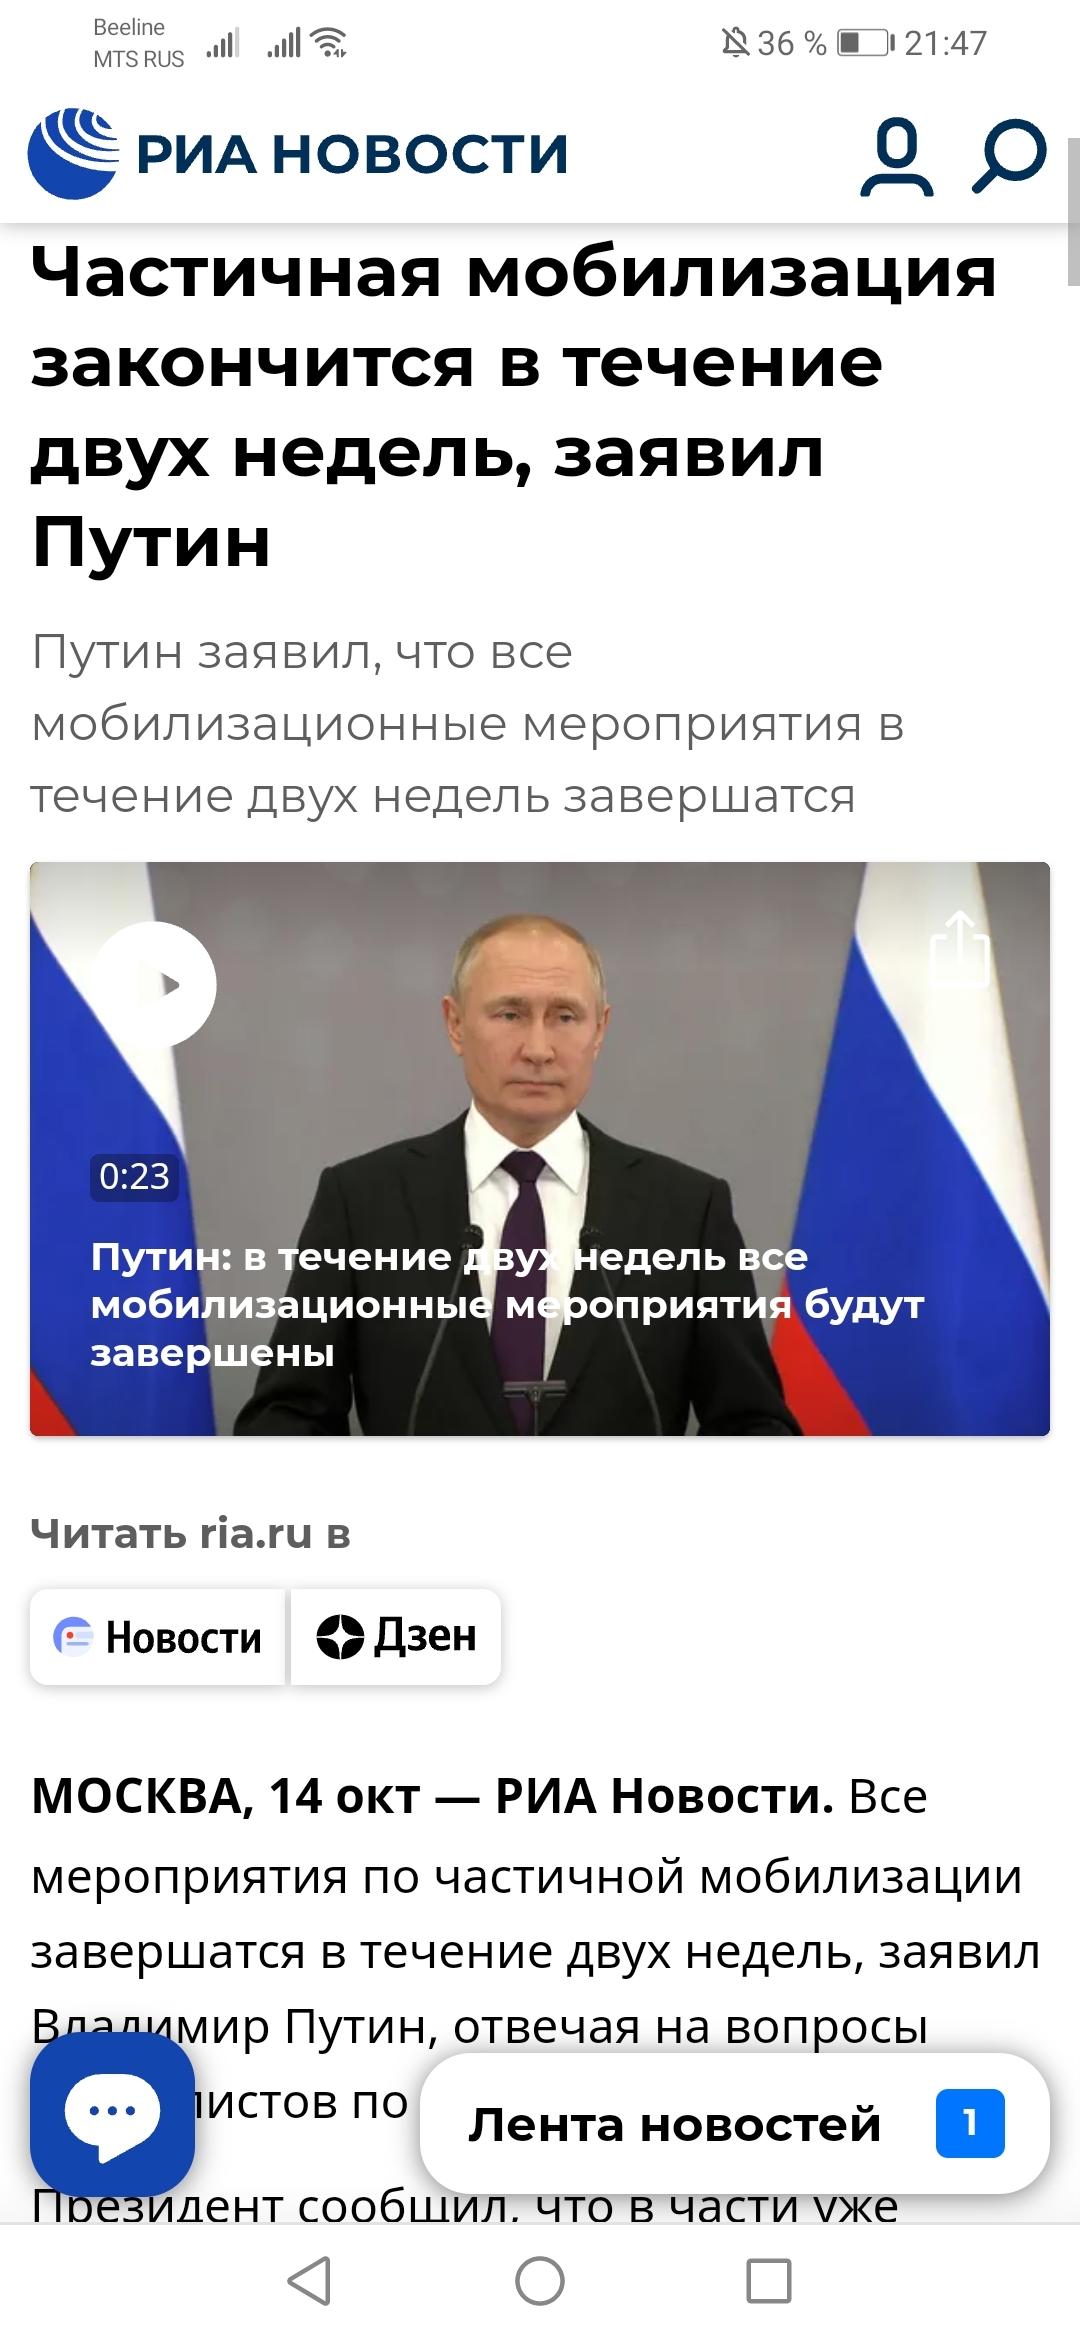 Partial Mobilization will end in 2 weeks - Politics, Screenshot, Риа Новости, Mobilization, Special operation, Longpost